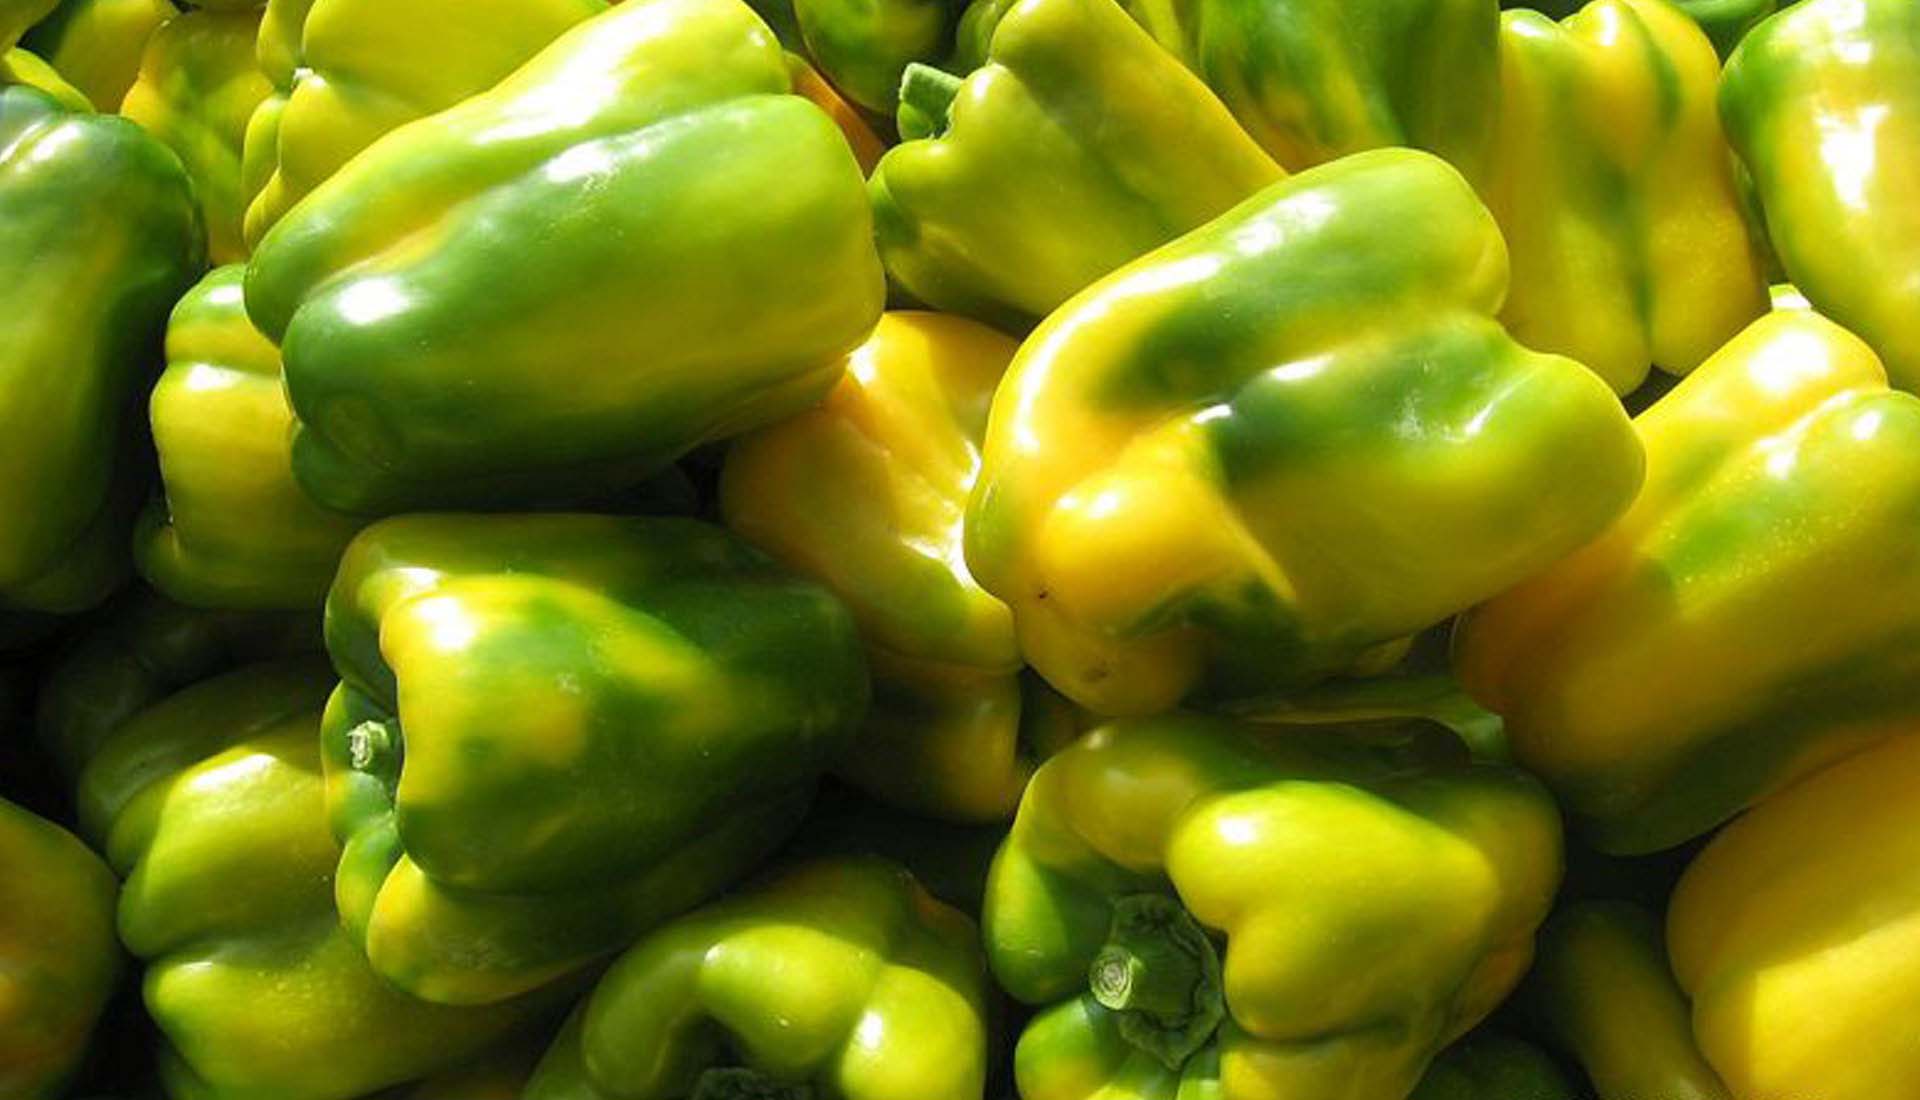 Peperoni trattati con concime organico - Peppers treated with organic fertilizer